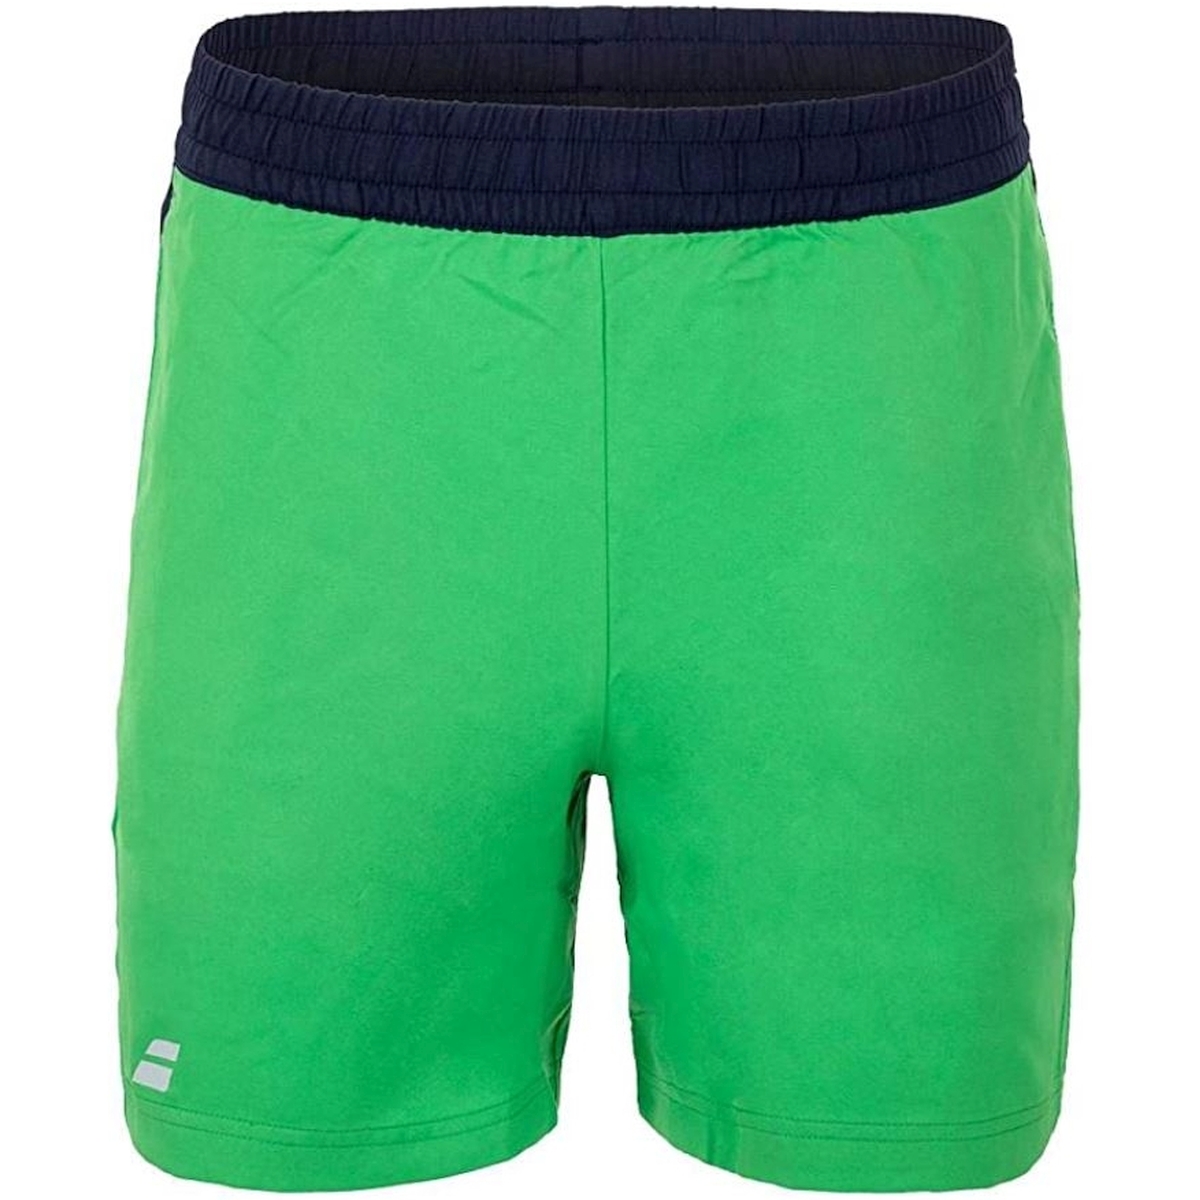 Babolat Men's Play Tennis Shorts (Poison Green)